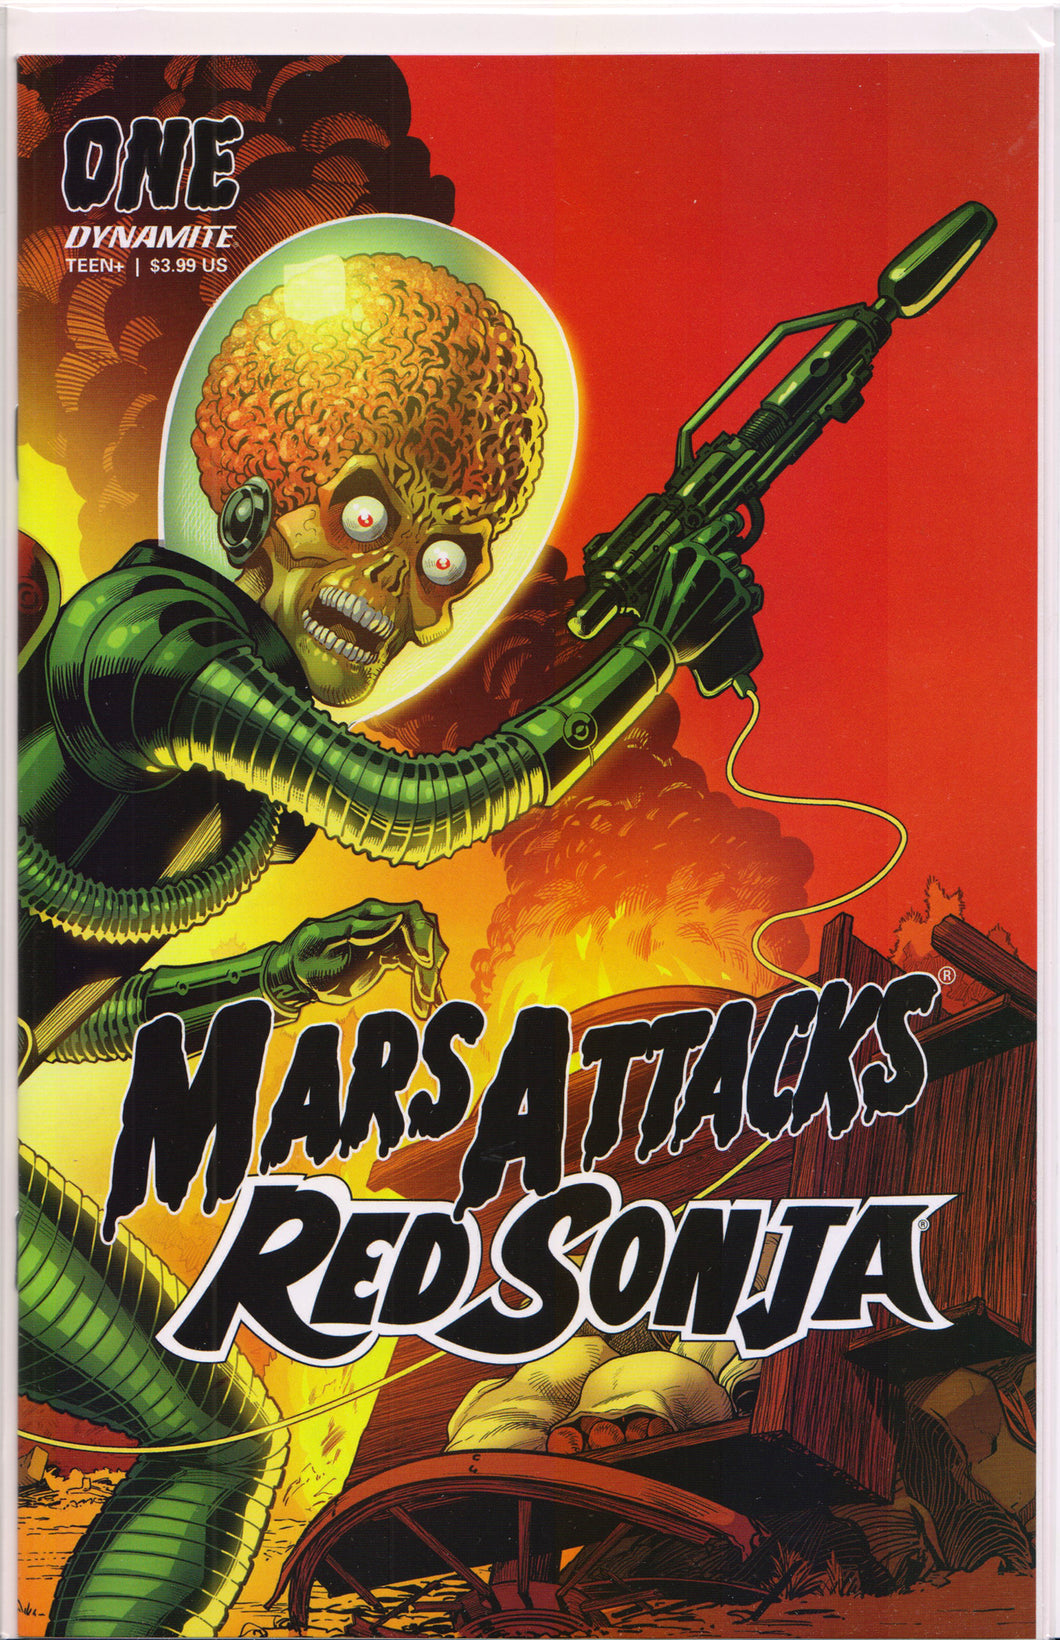 MARS ATTACKS RED SONJA #1 (KITSON VARIANT) COMIC BOOK ~ Dynamite Entertainment